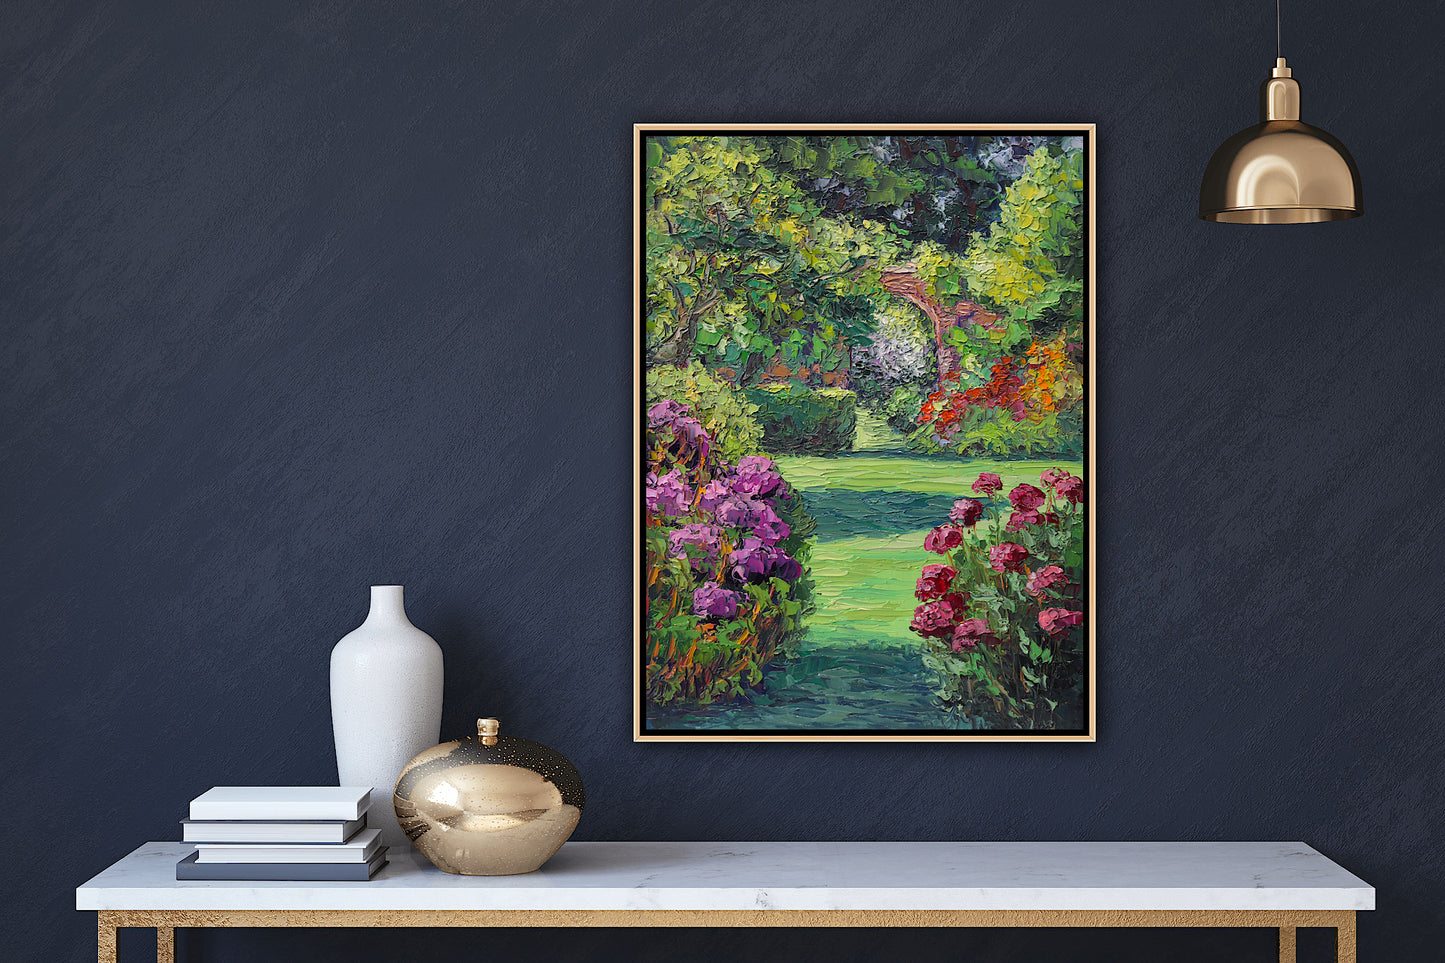 Walled Garden, Original 12" x 9" Garden Landscape Oil Painting On Canvas Panel